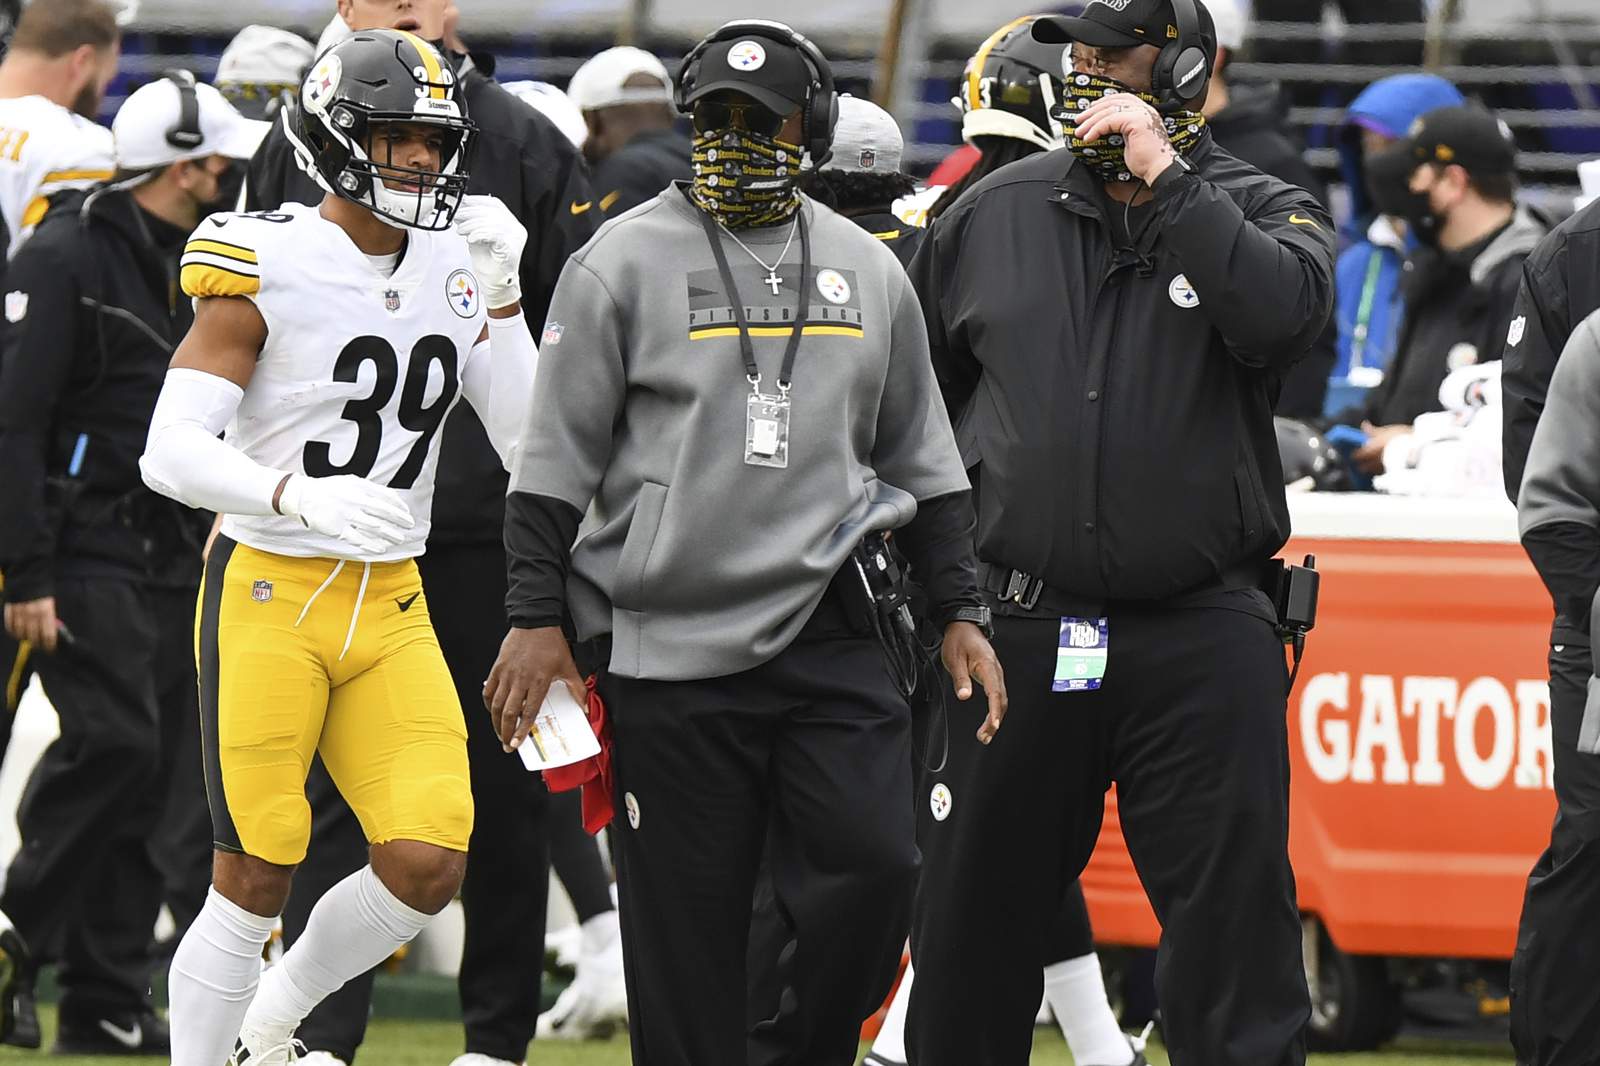 AP source: Tomlin, Steelers fined for improper mask wearing